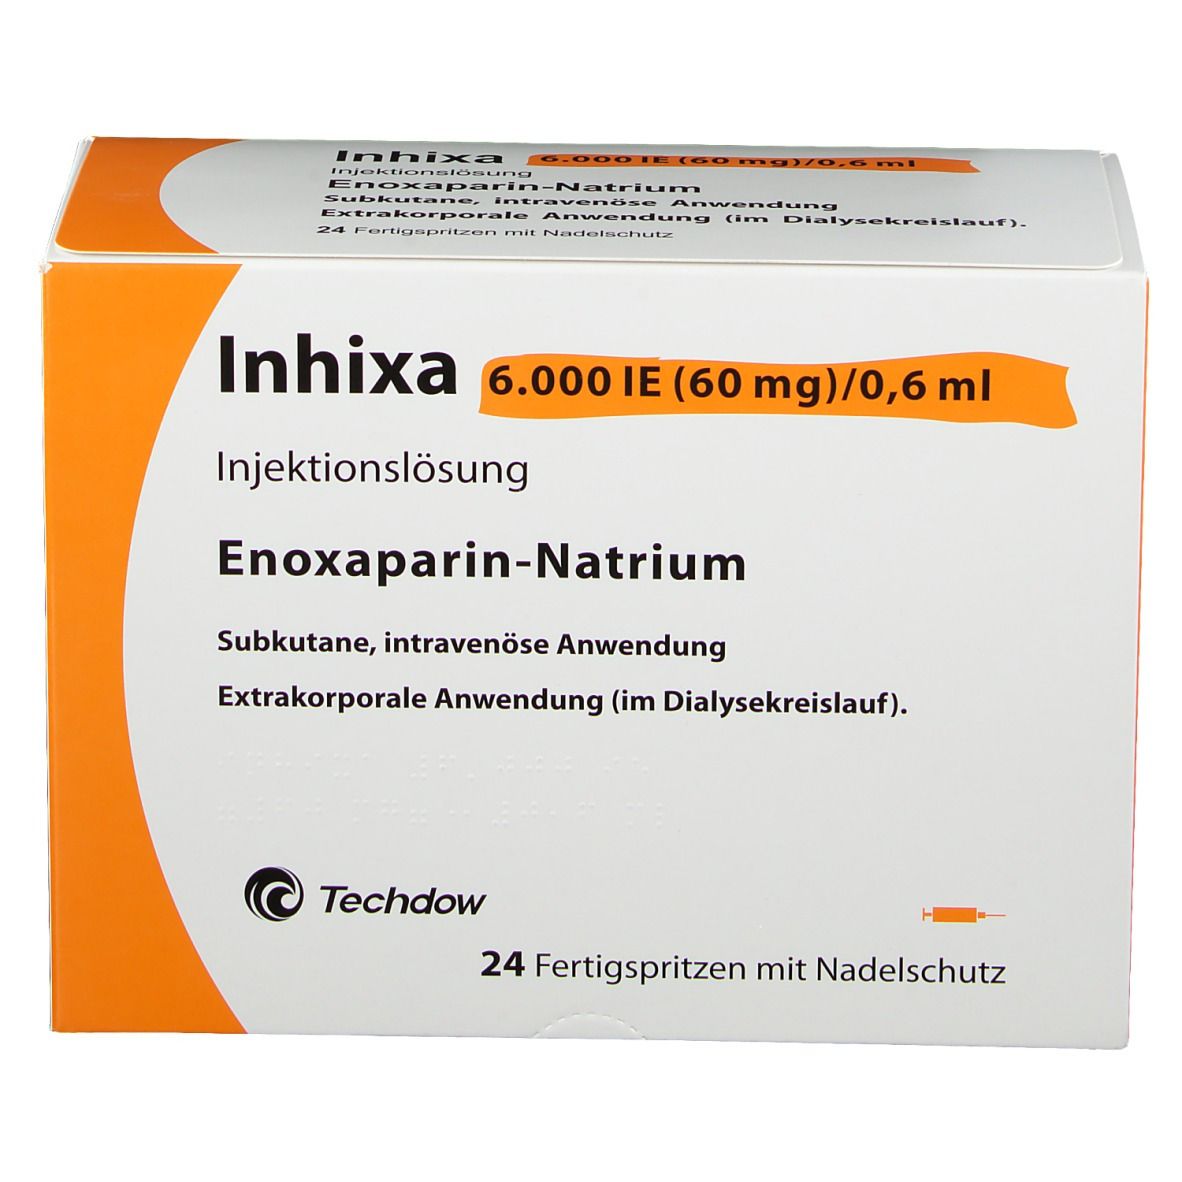 Inhixa 6.000 IE 60 mg/0,6 ml